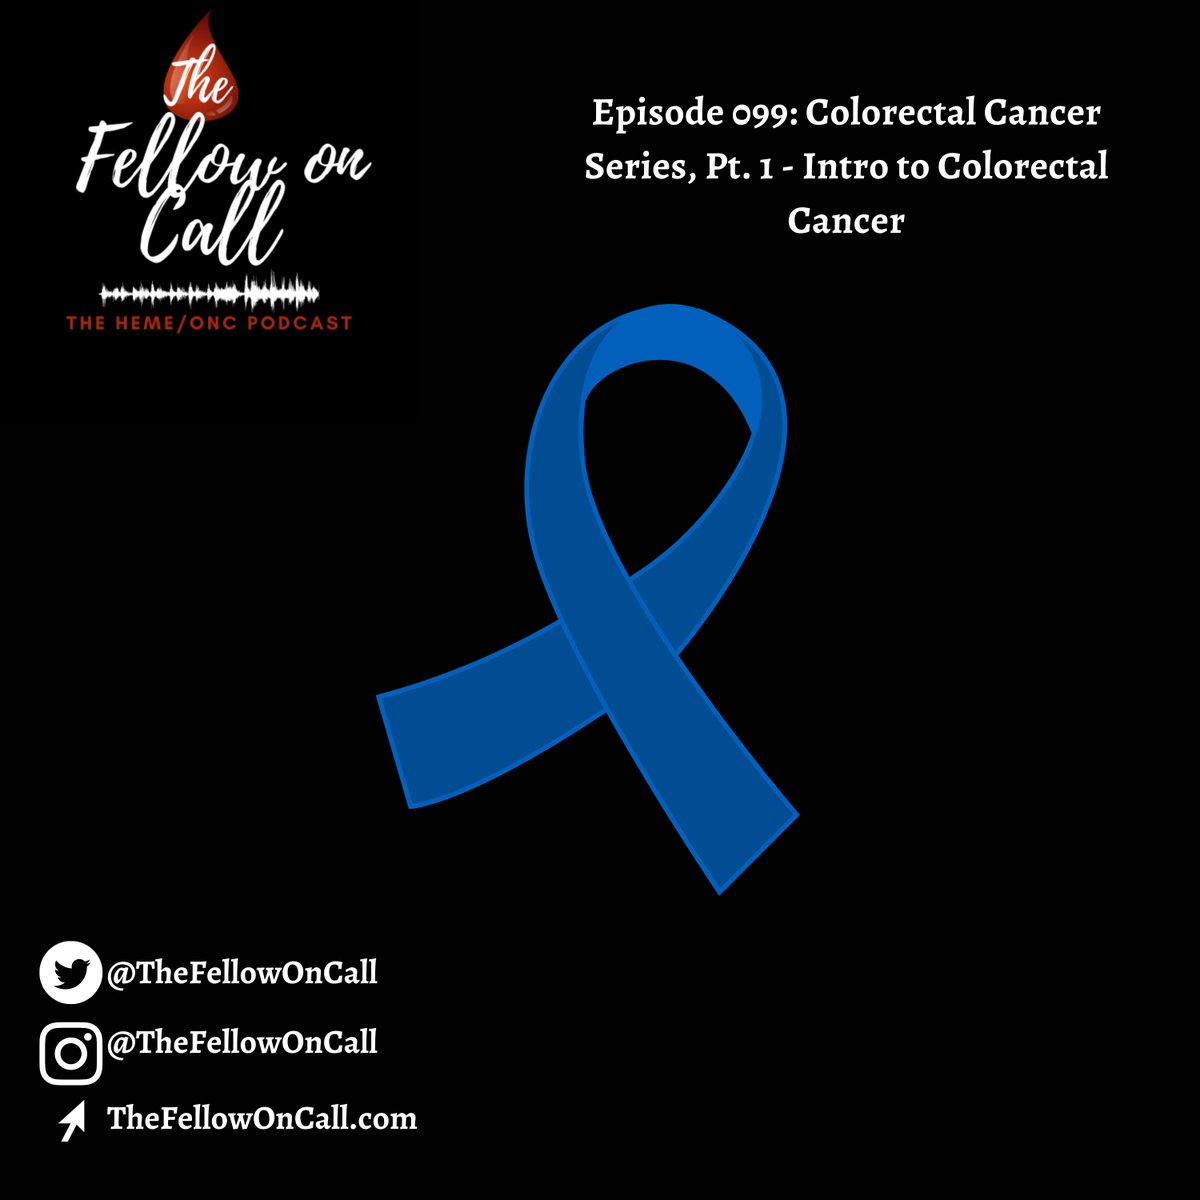 New episode and series alert! Link in bio!
@CUHemeOnc
@RoswellHemOnc
@HemUcsd
@UChicagoHemOnc
@BCMHemeOnc
@uw_hemeoncpc
@PittHemeOnc

#MedEd #MedicalEducation #Hematology #Oncology #HemeOnc #Podcast #MedicalStudent #Residency #InternalMedicine